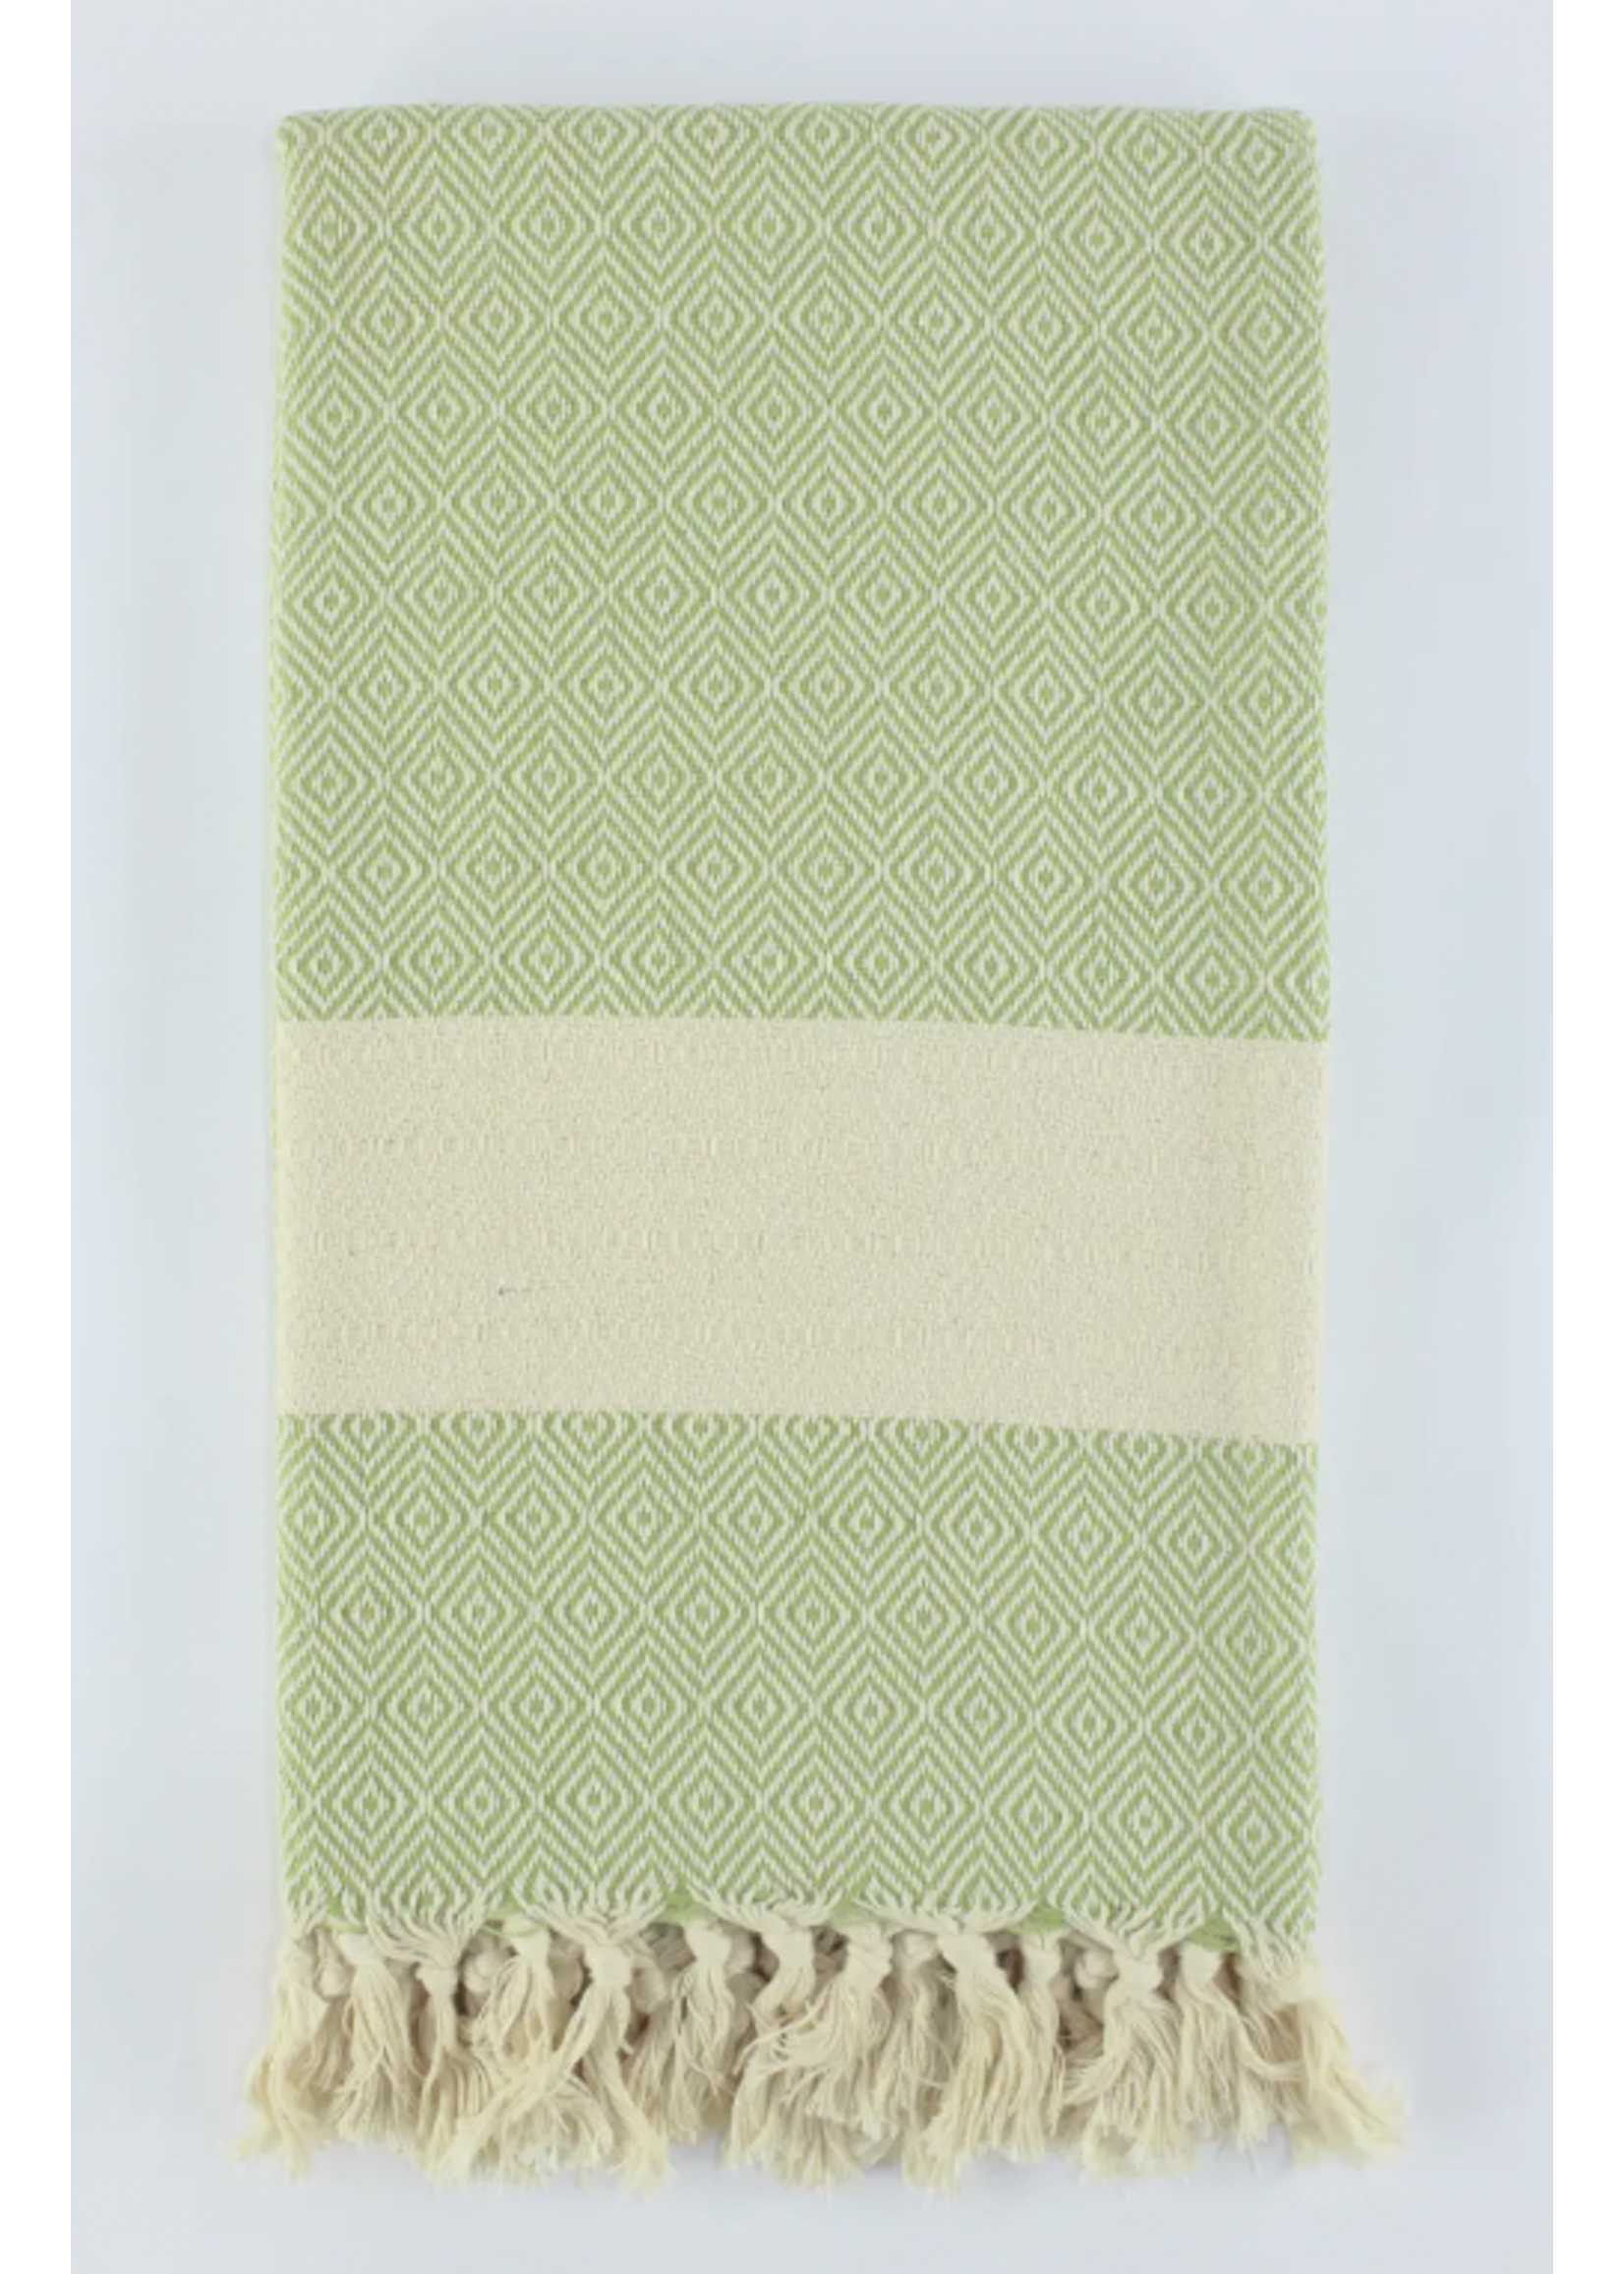 Turkish Linens & Towels Turkish Cotton Towel -  Herringbone Pistachio green